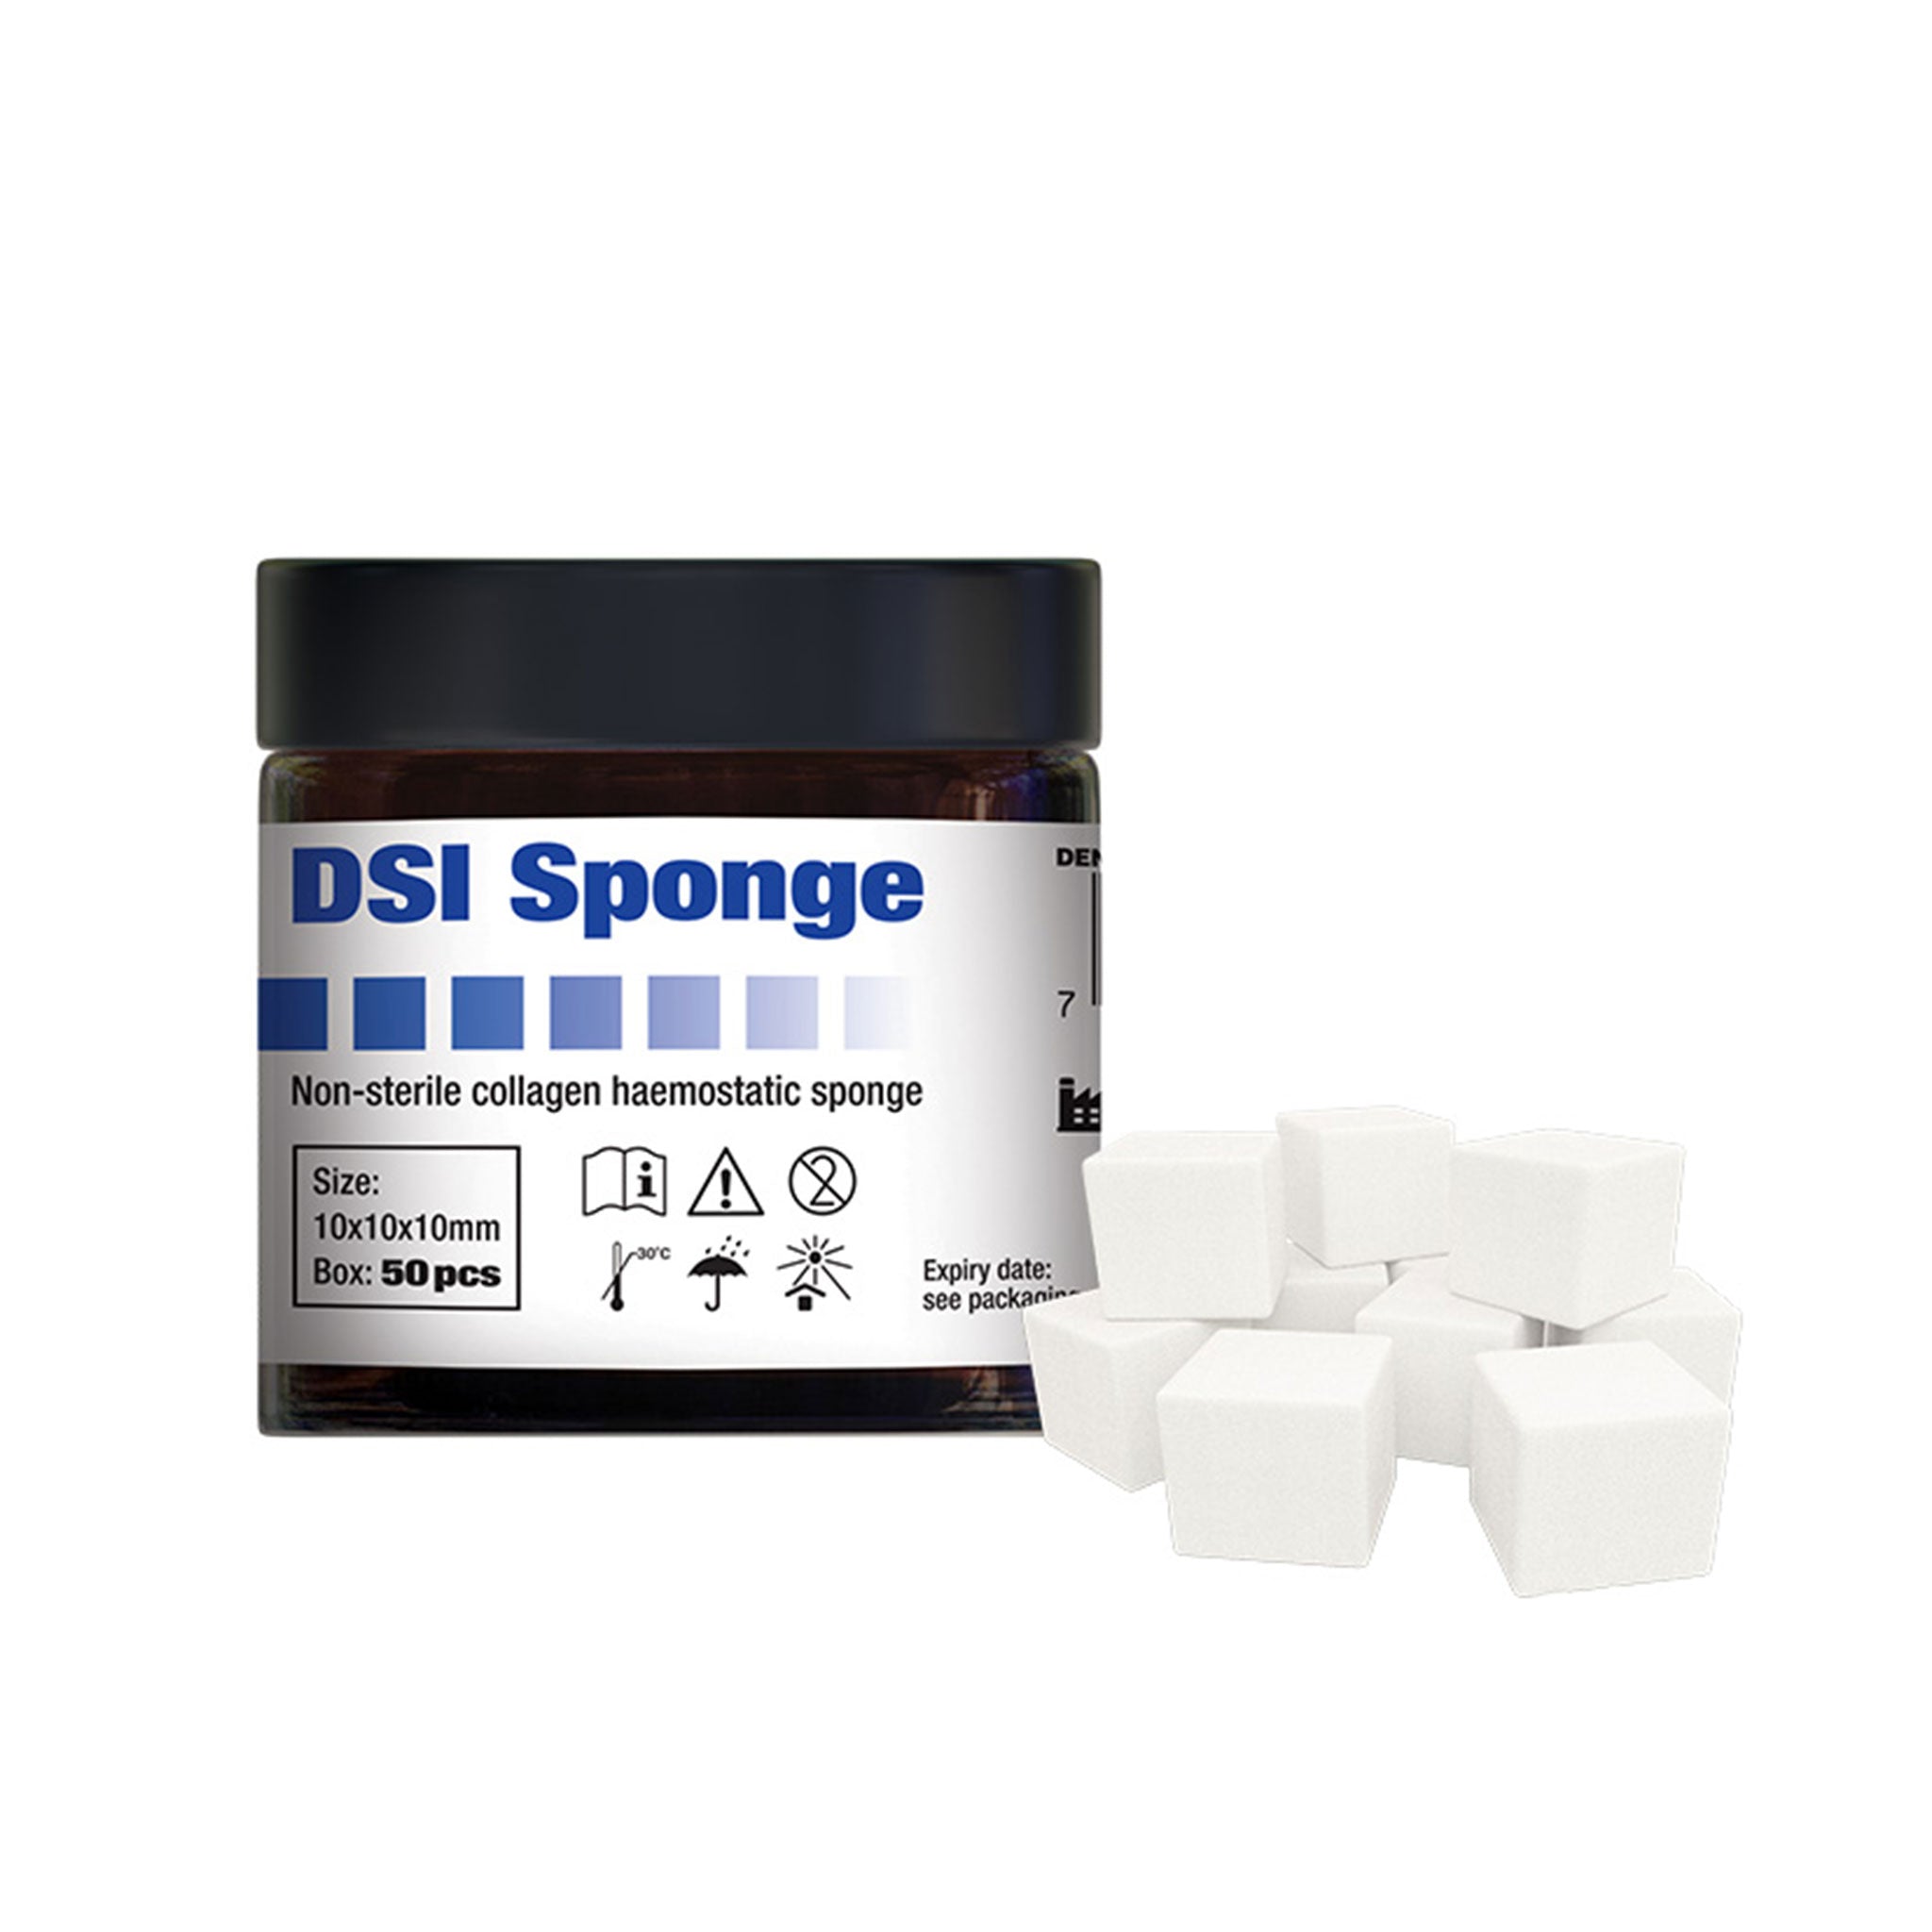 DSI Sponge Hemostatic Collagen Gelatin Non Sterile Cubes 10x10mm